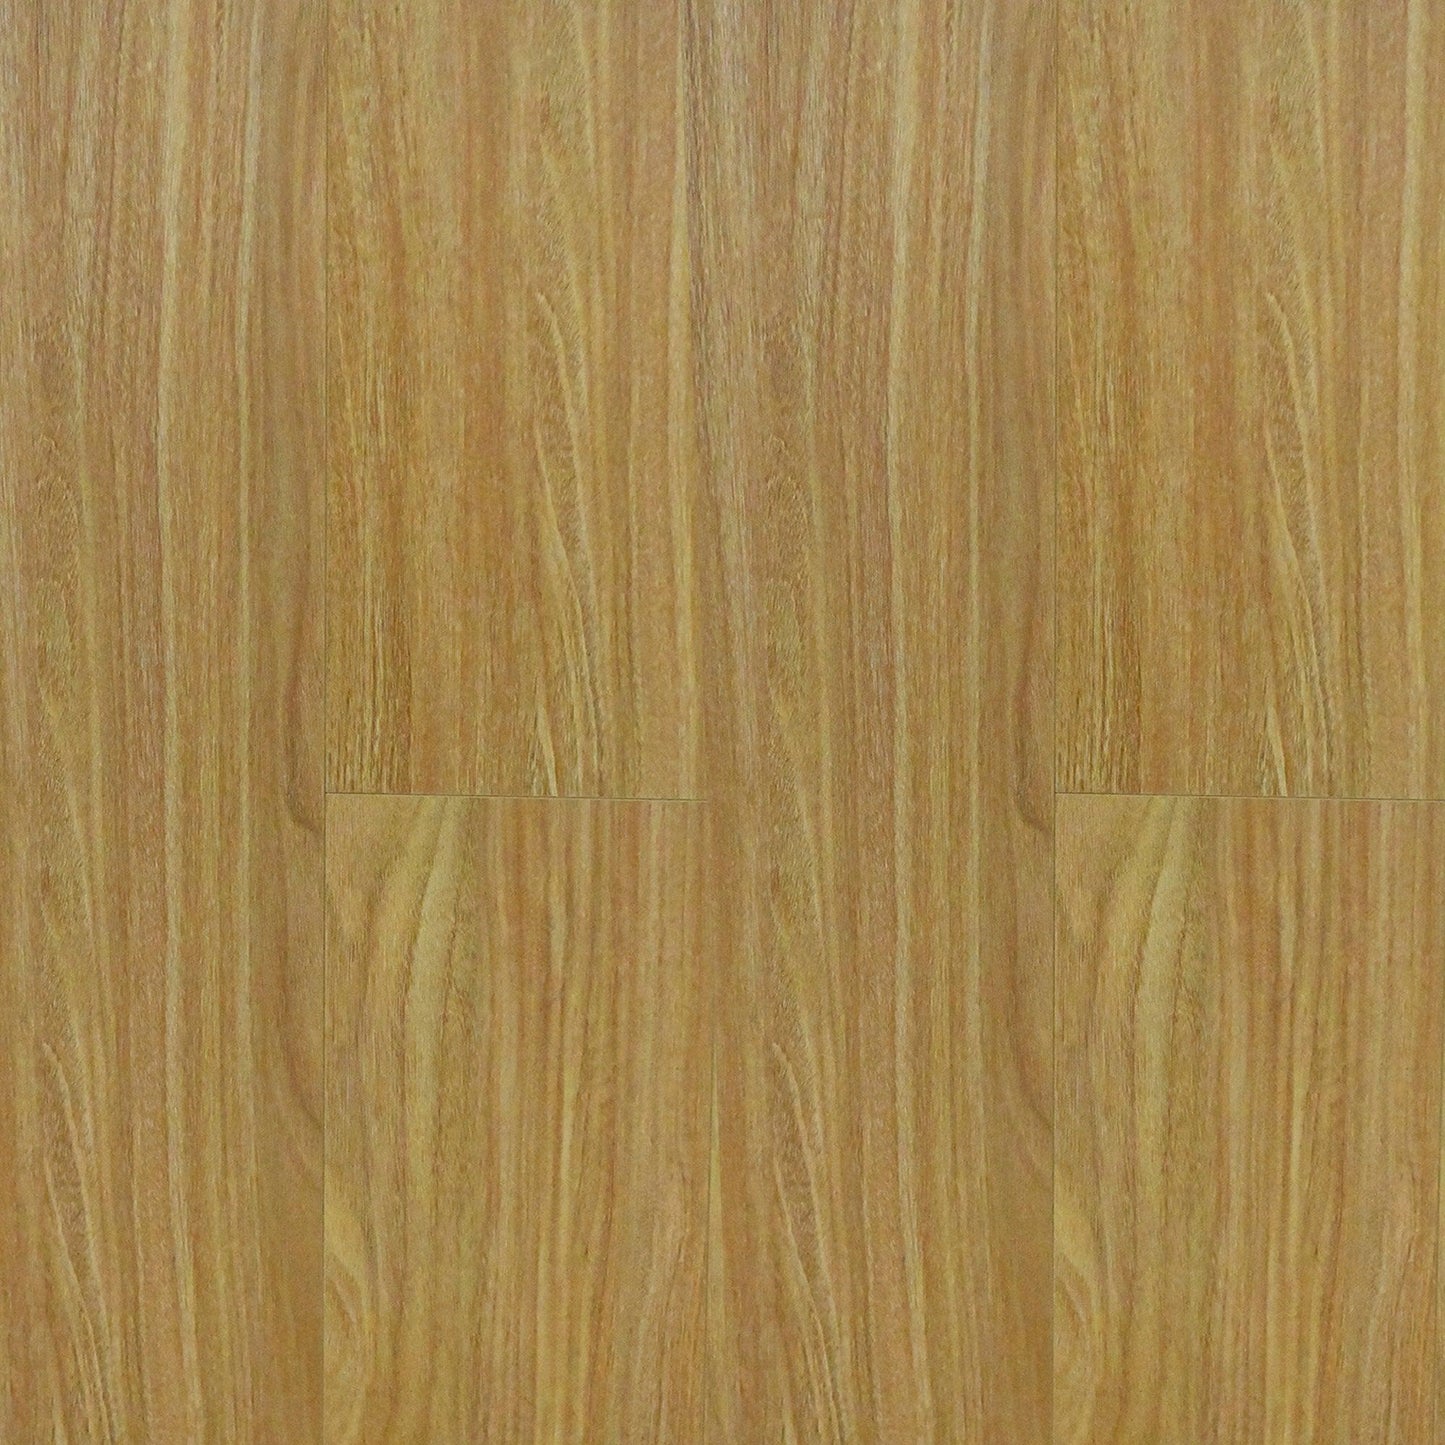 Birch - Sample Laminate Flooring by KLD Home